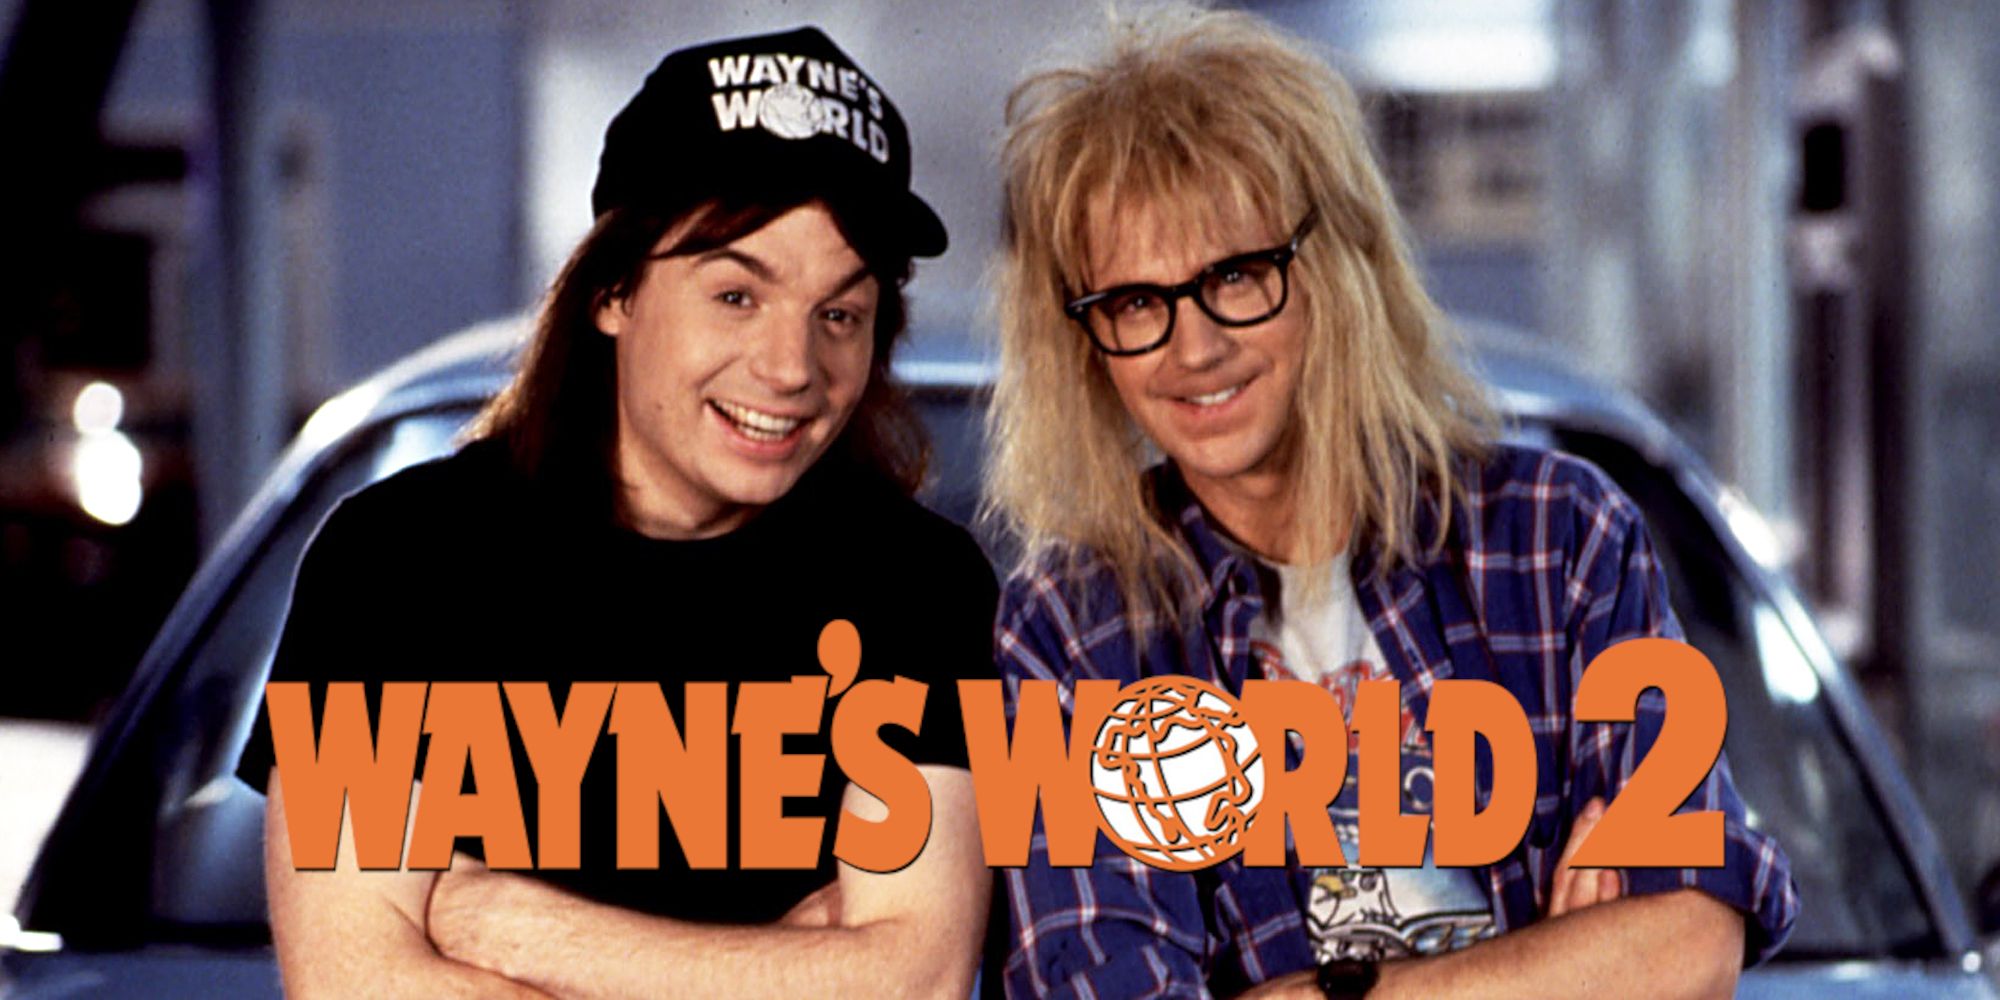 Wayne's World 2 photo with logo header